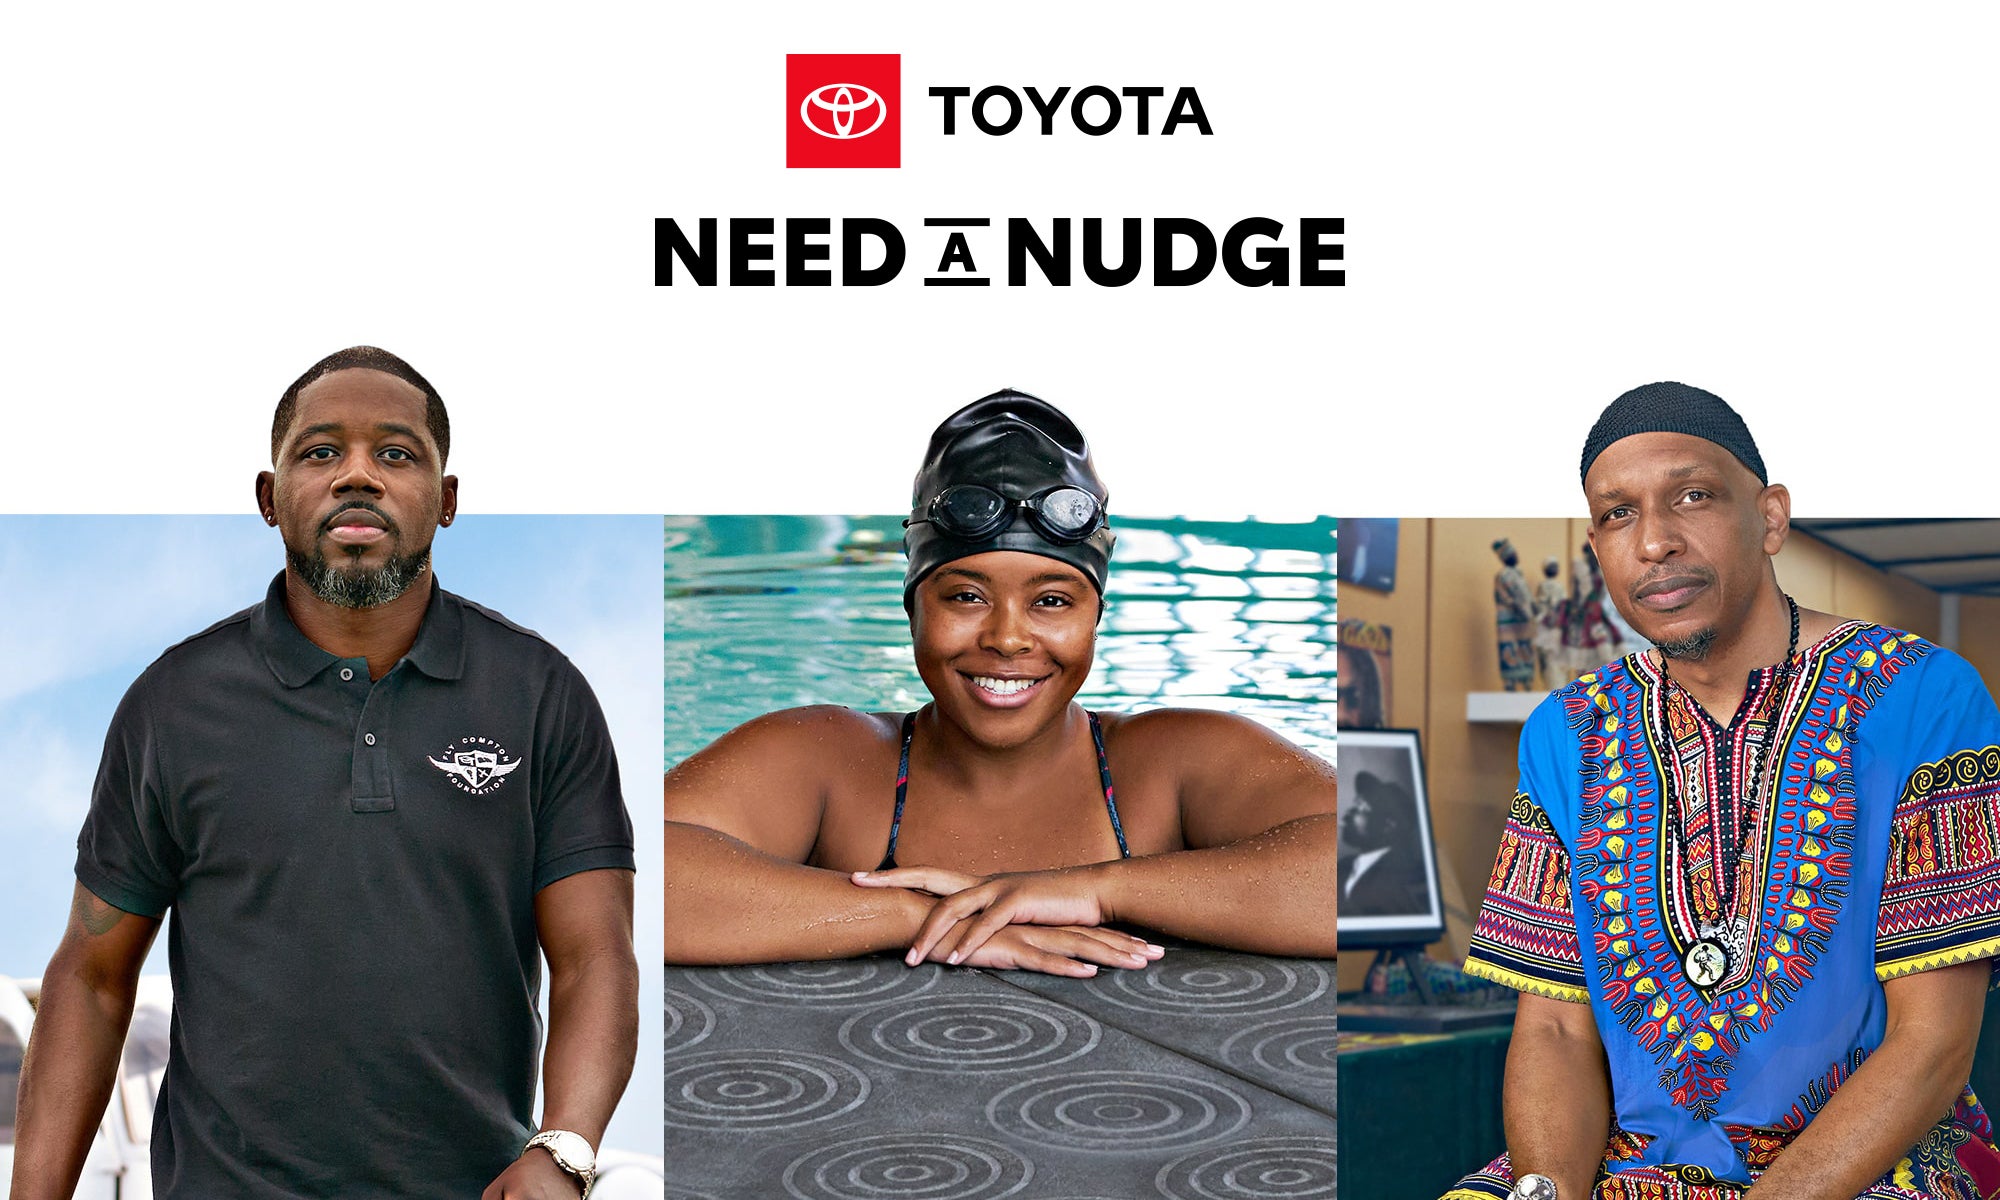 Toyota Need a Nudge Program